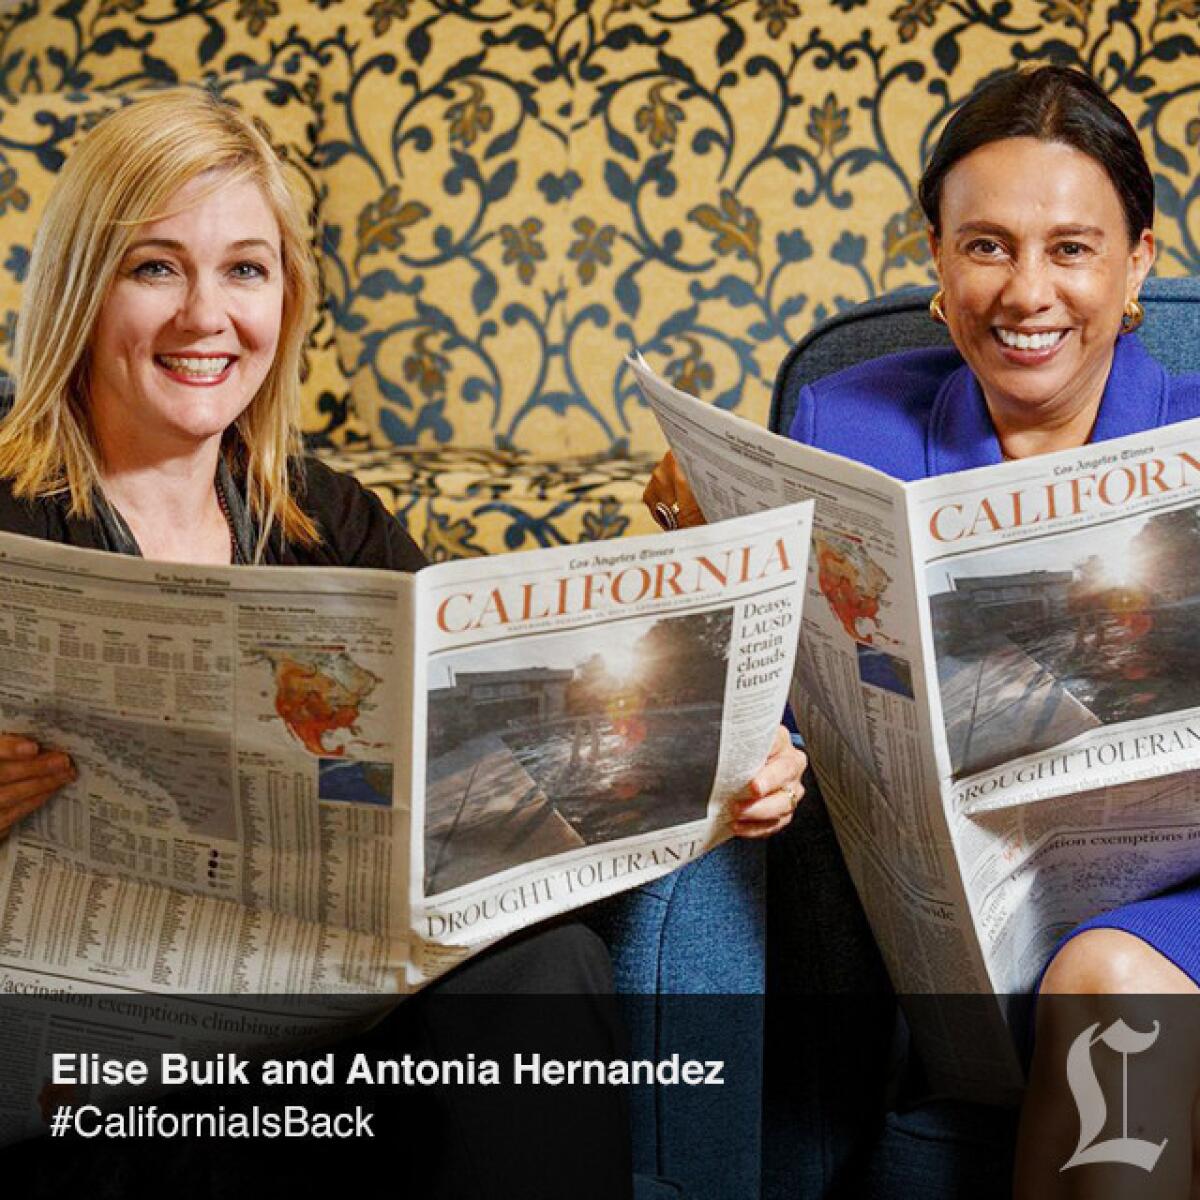 Elise Buik, United Way of Greater LA and Antonia Hernandez, California Community Foundation